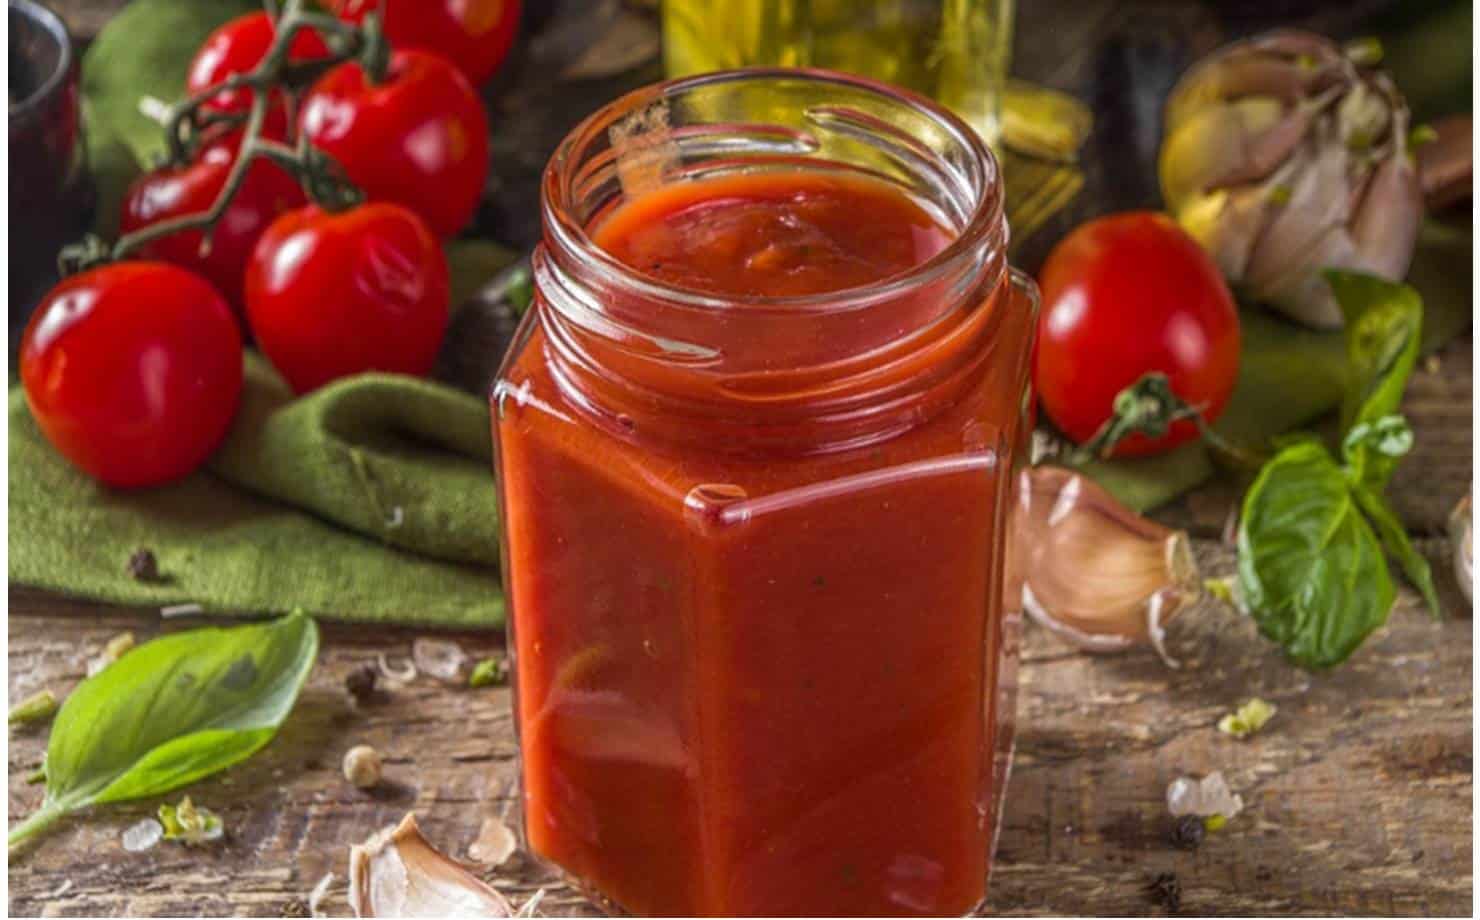 Prepare um delicioso molho de tomate com poucos ingredientes